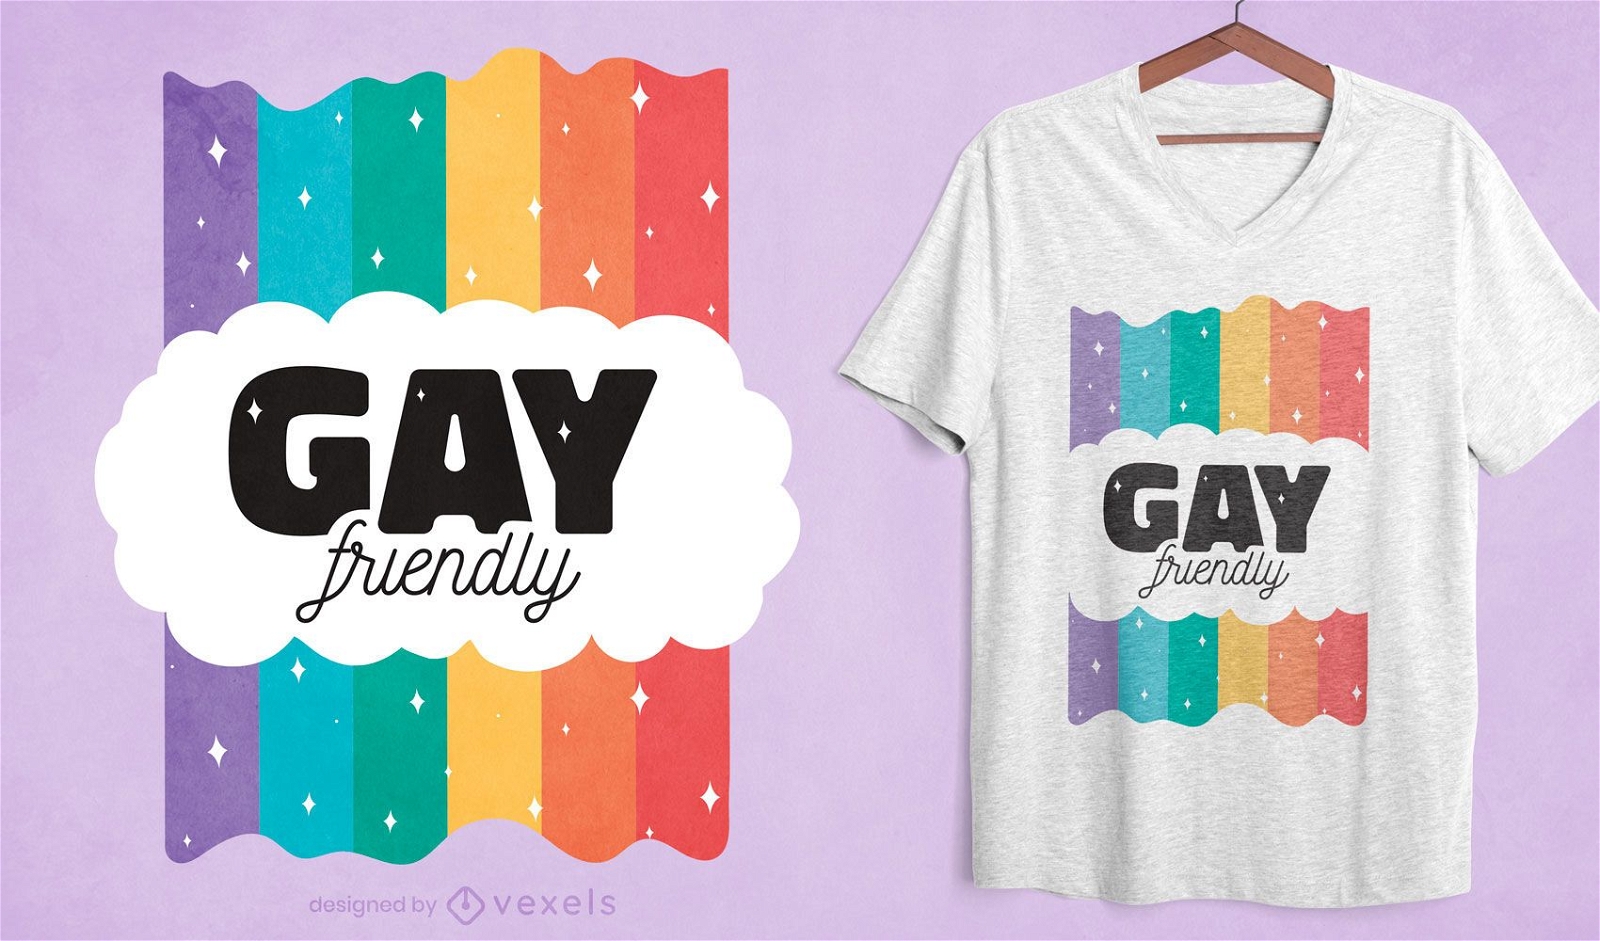 Gay friendly t-shirt design